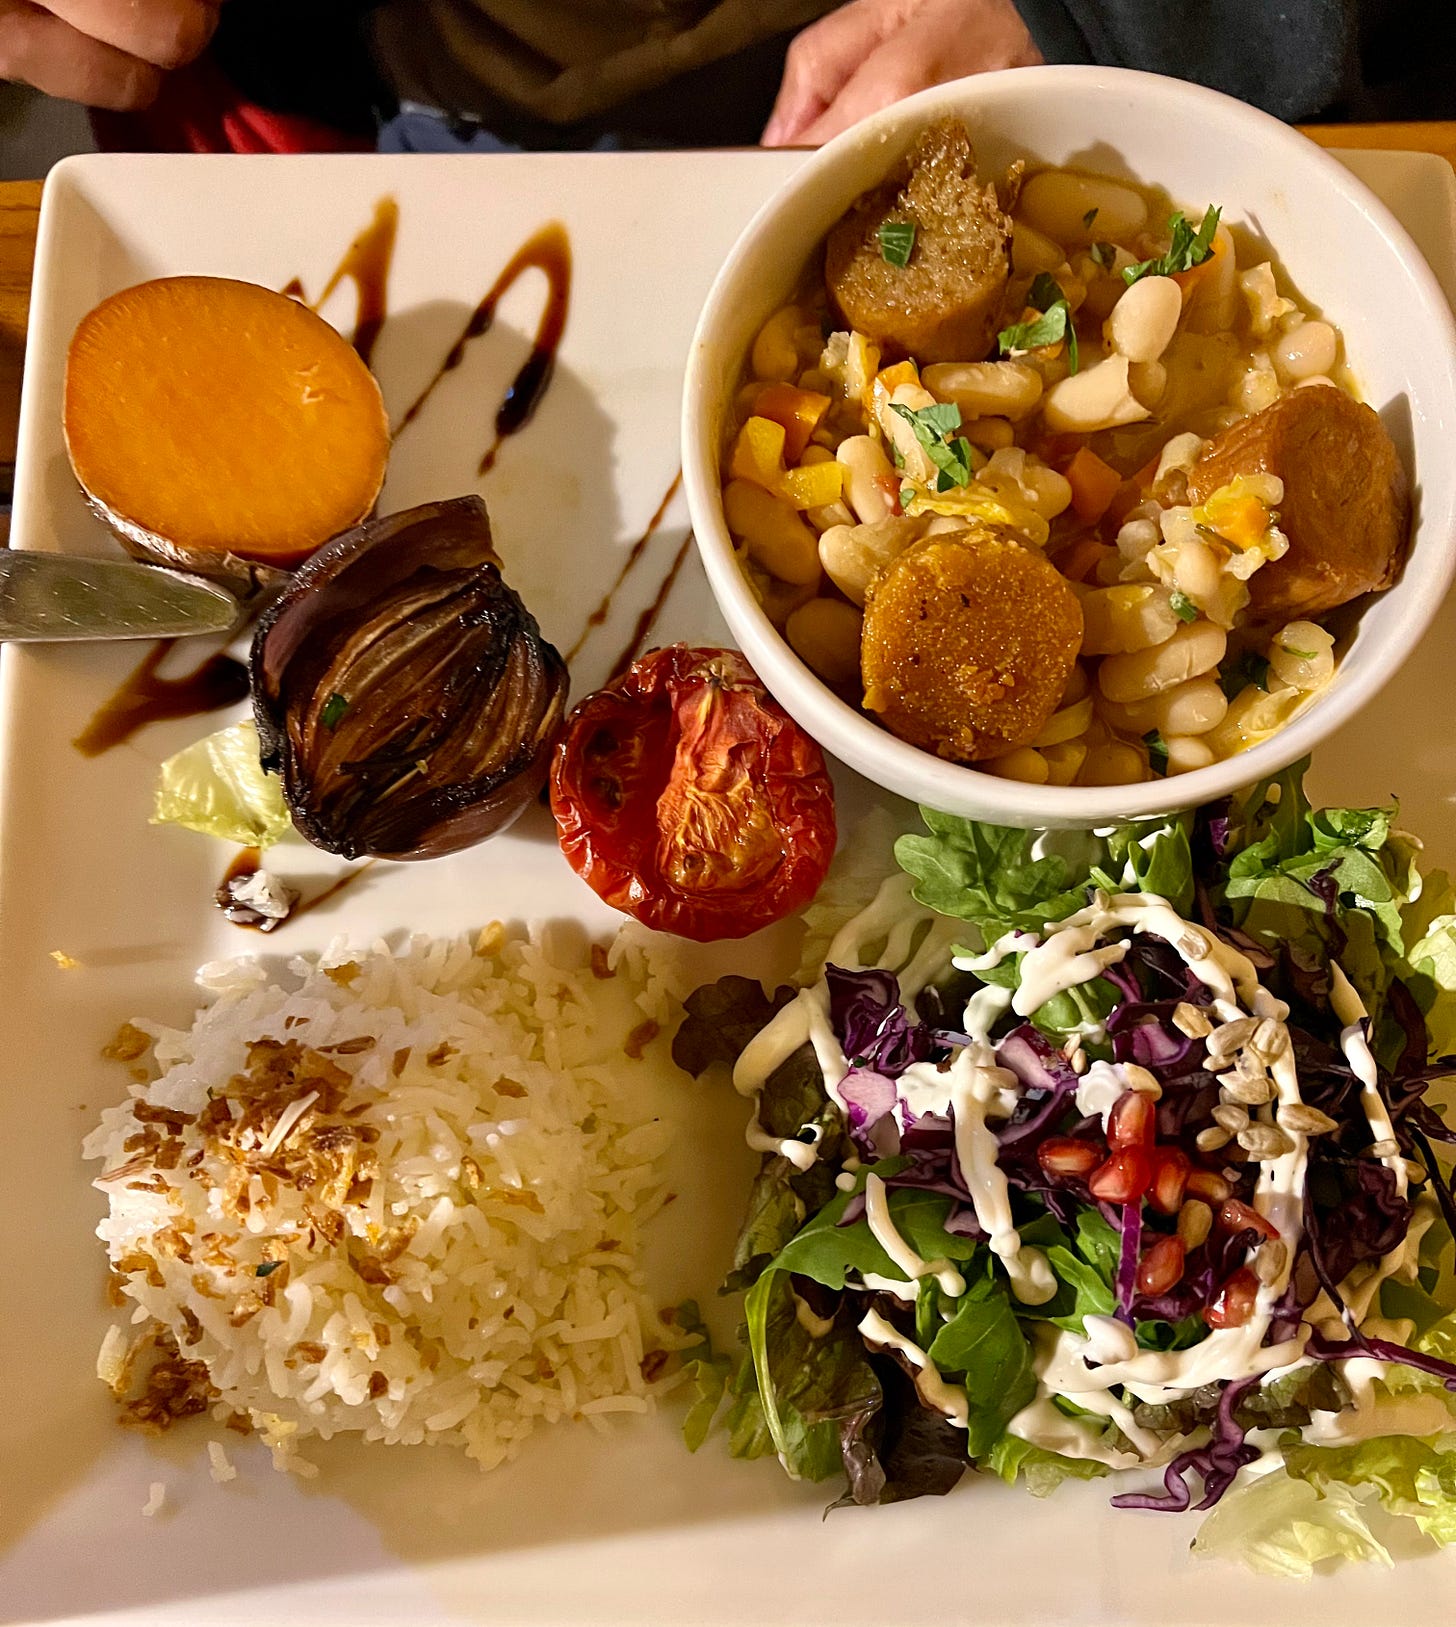 Vegan Feijoada with salad, rice and vegan chorizo